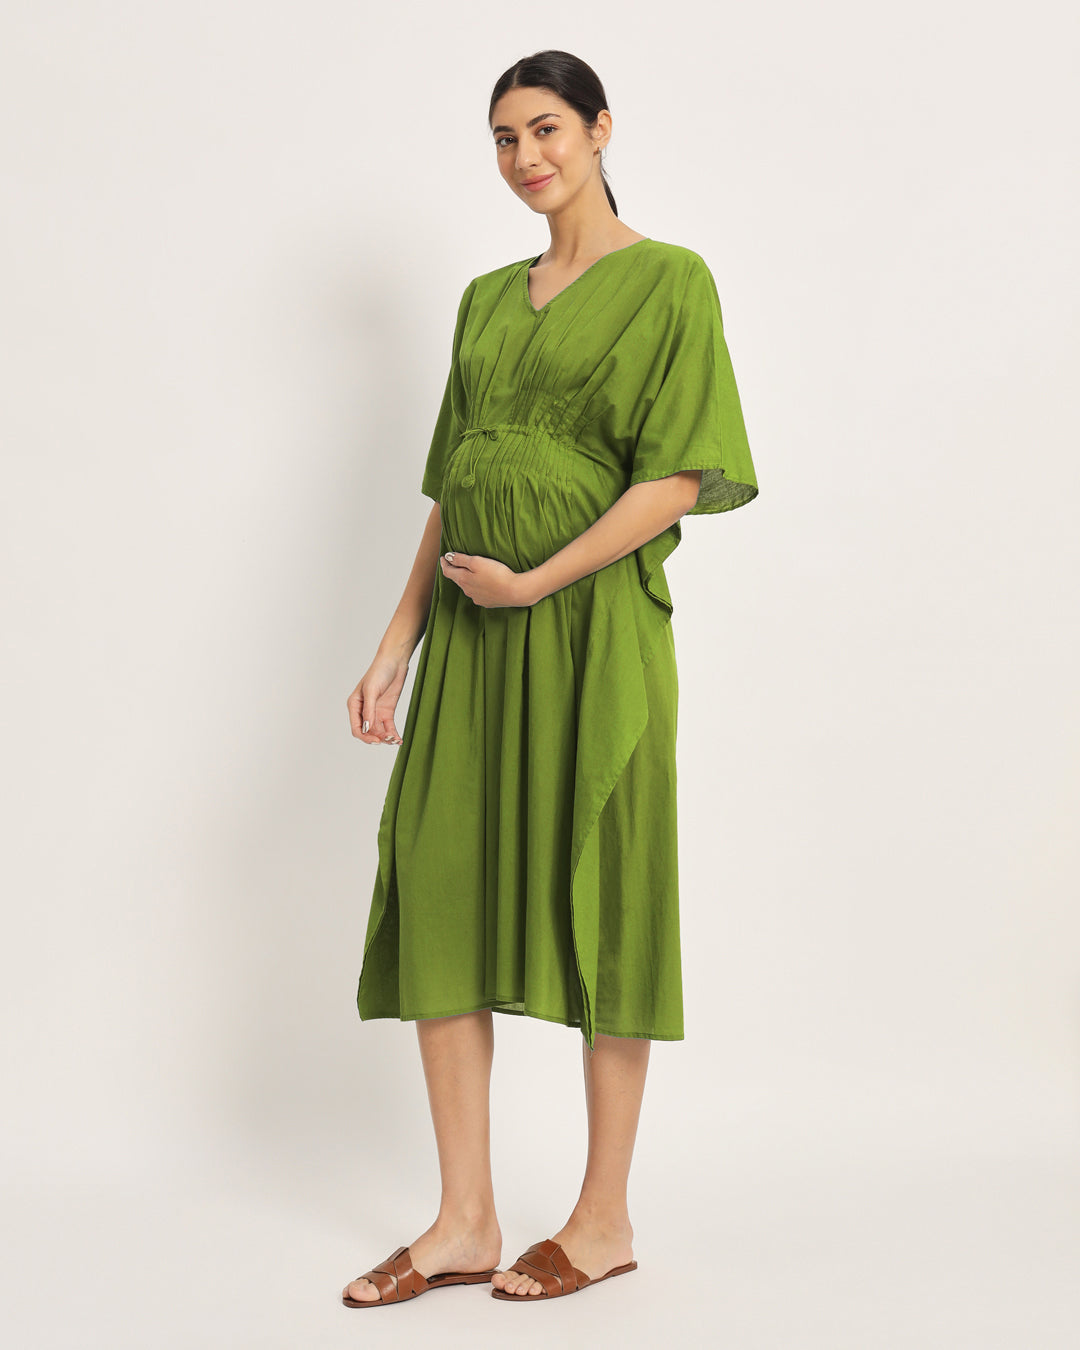 Combo: Black & Sage Green Mommy Mode Maternity & Nursing Dress